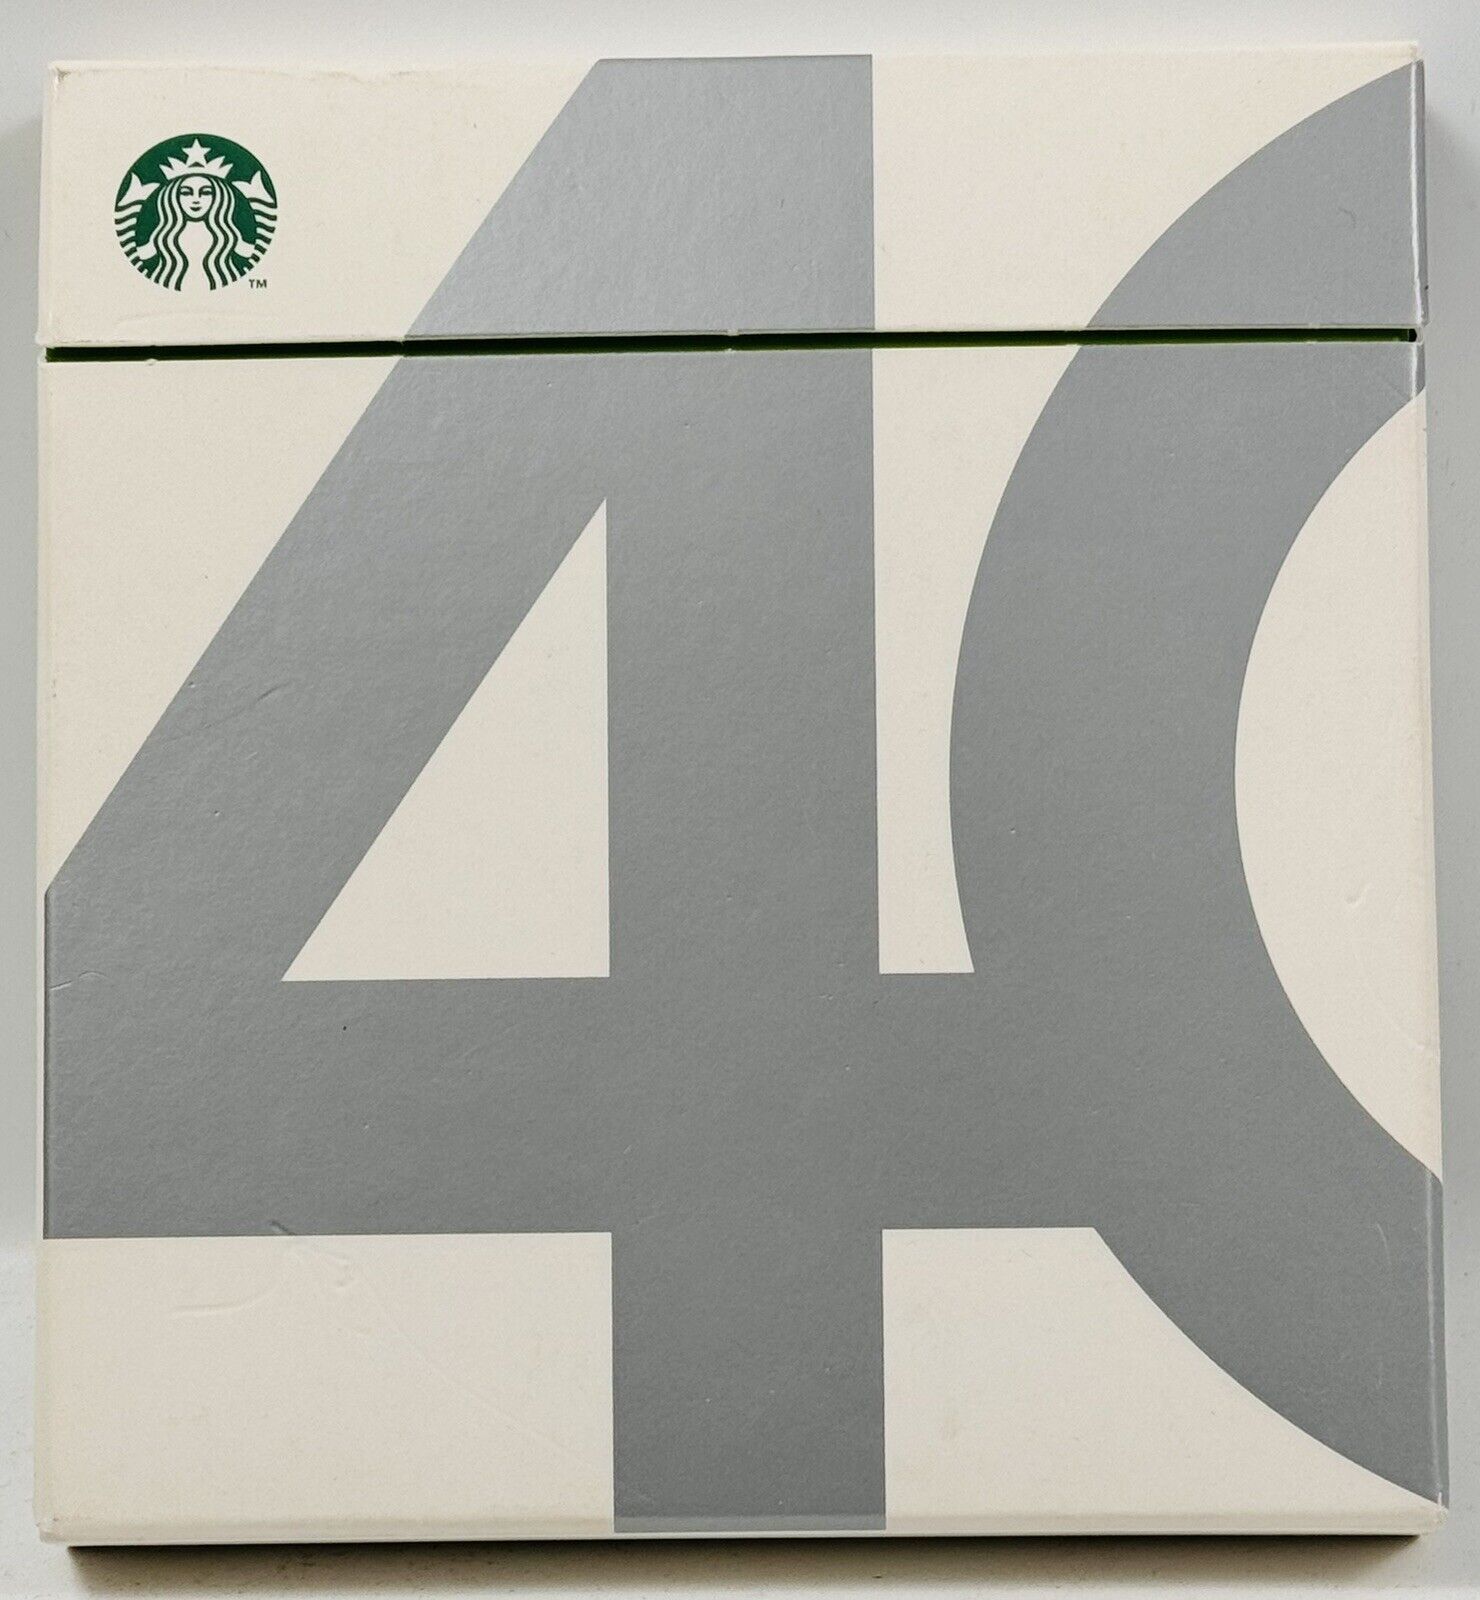 Starbucks 40th Anniversary 2 CD Set  Music From Starbucks Coffeehouses VG Plus